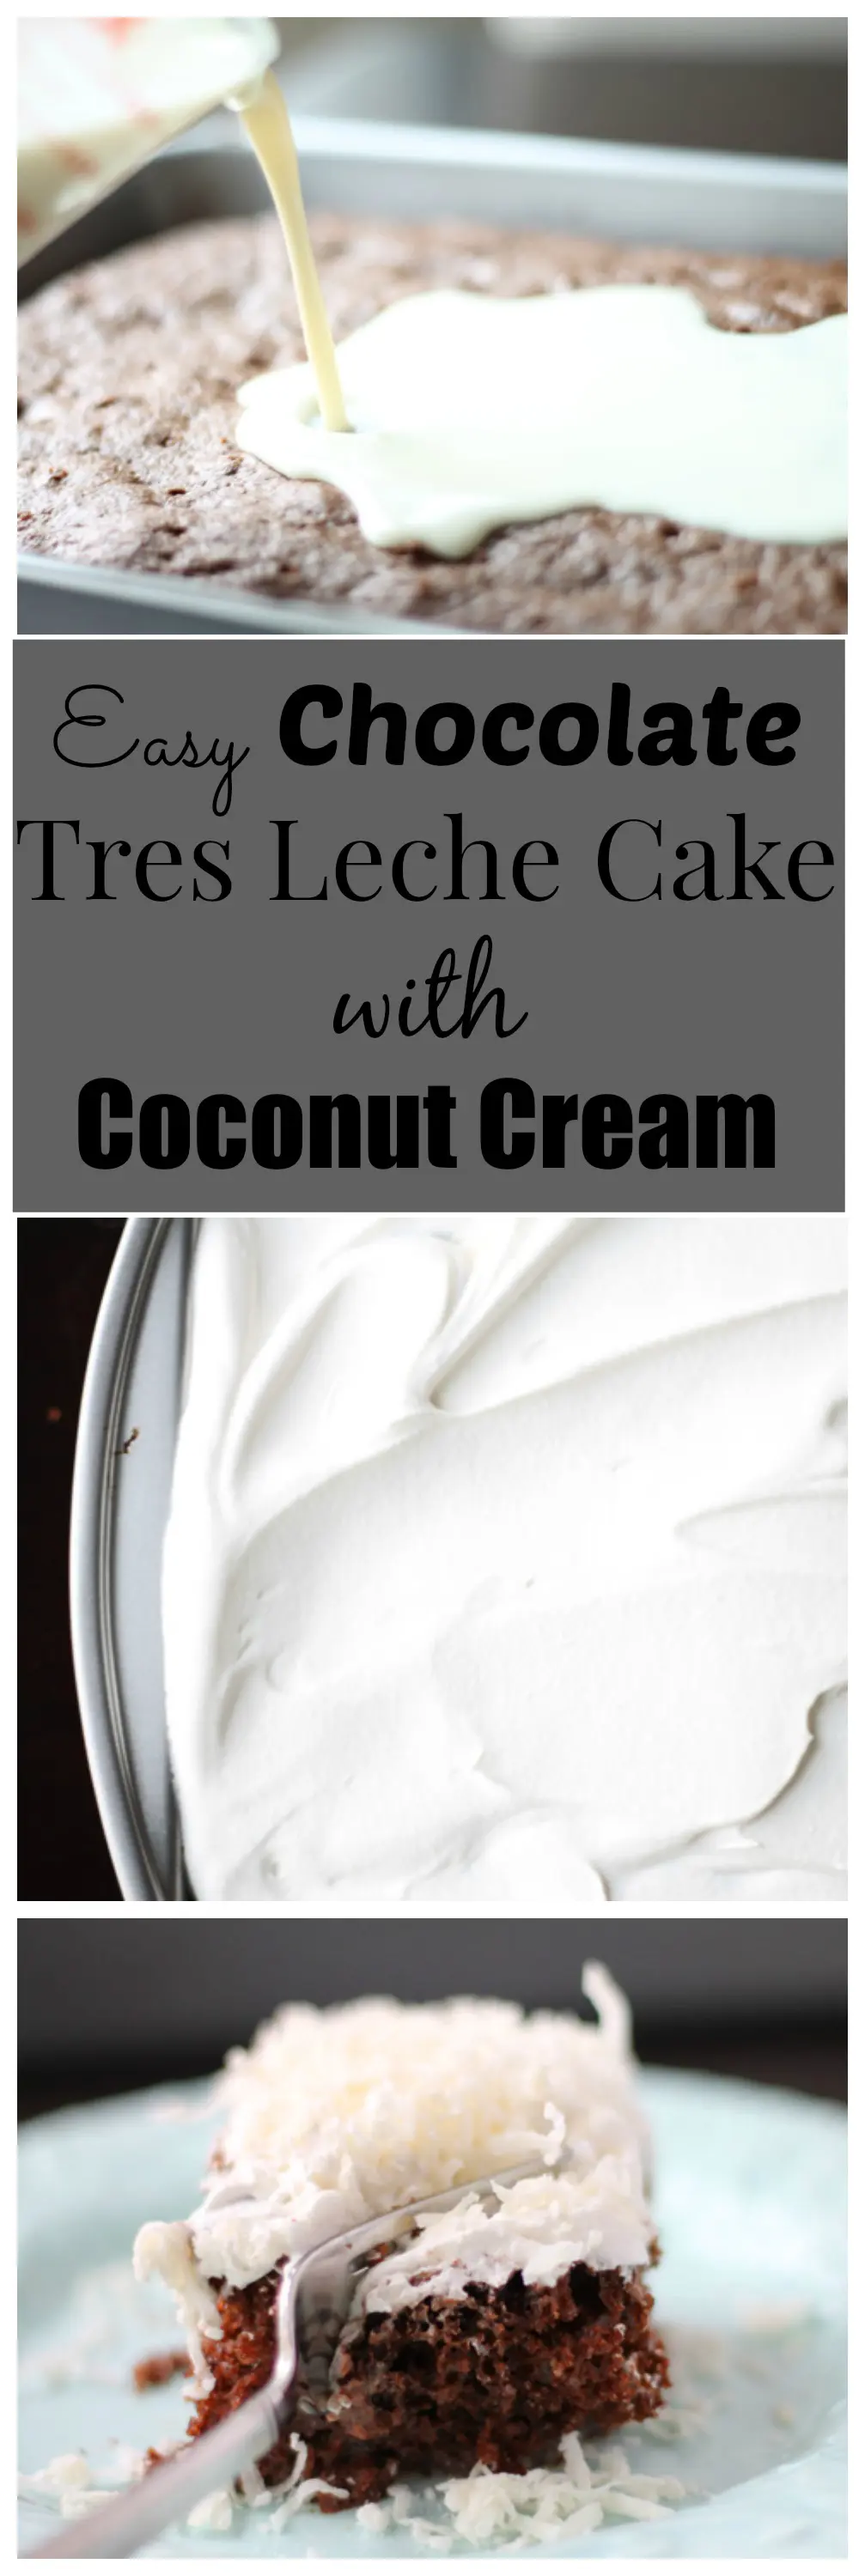 Easy Chocolate Tres Leche Cake with Coconut Cream